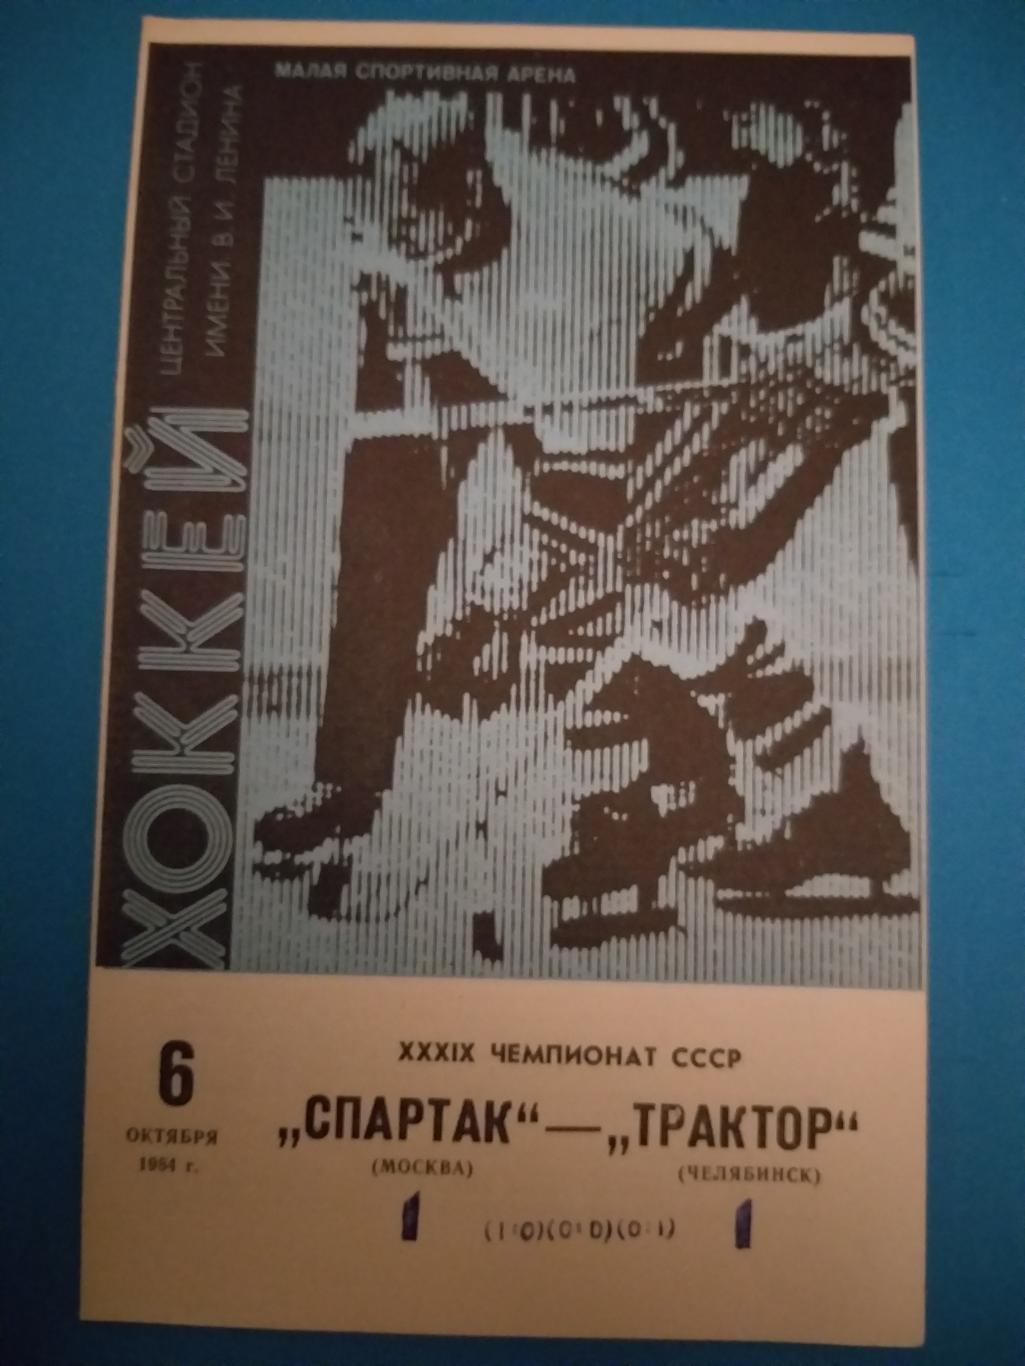 Спартак(Москва)- Трактор(Челябинск) 6.10.1984